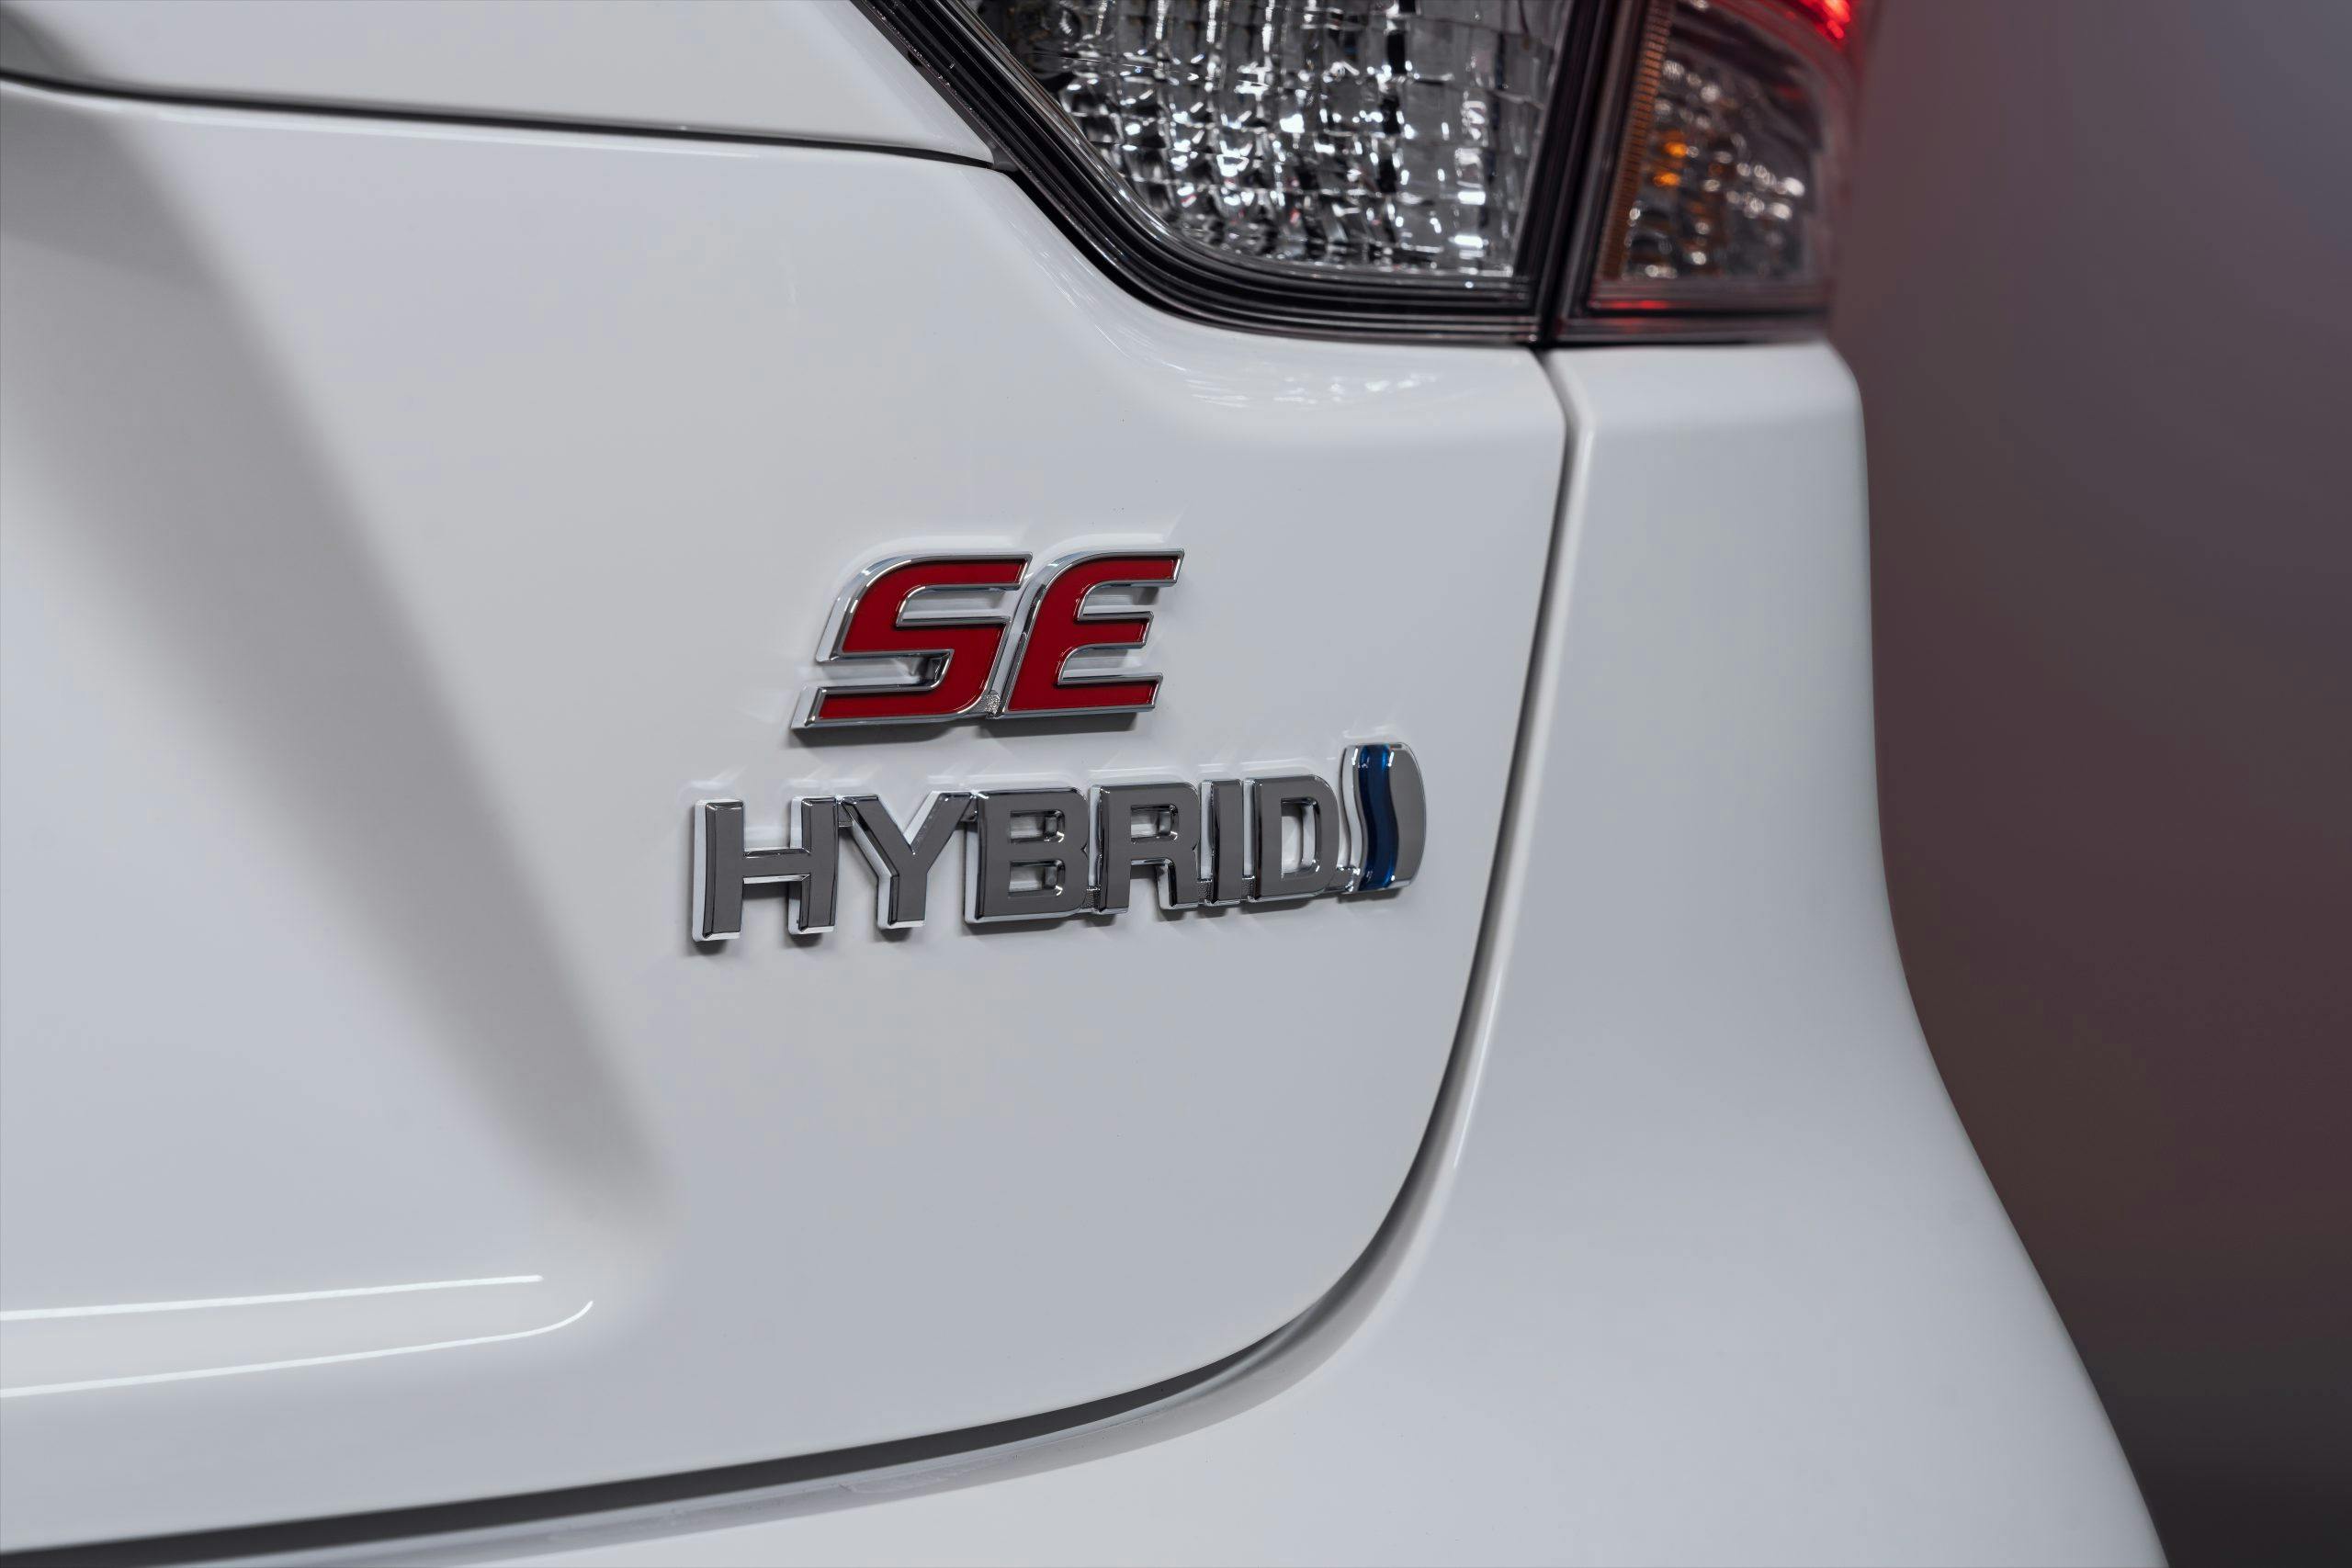 2023 Toyota Corolla Hybrid exterior badging detail